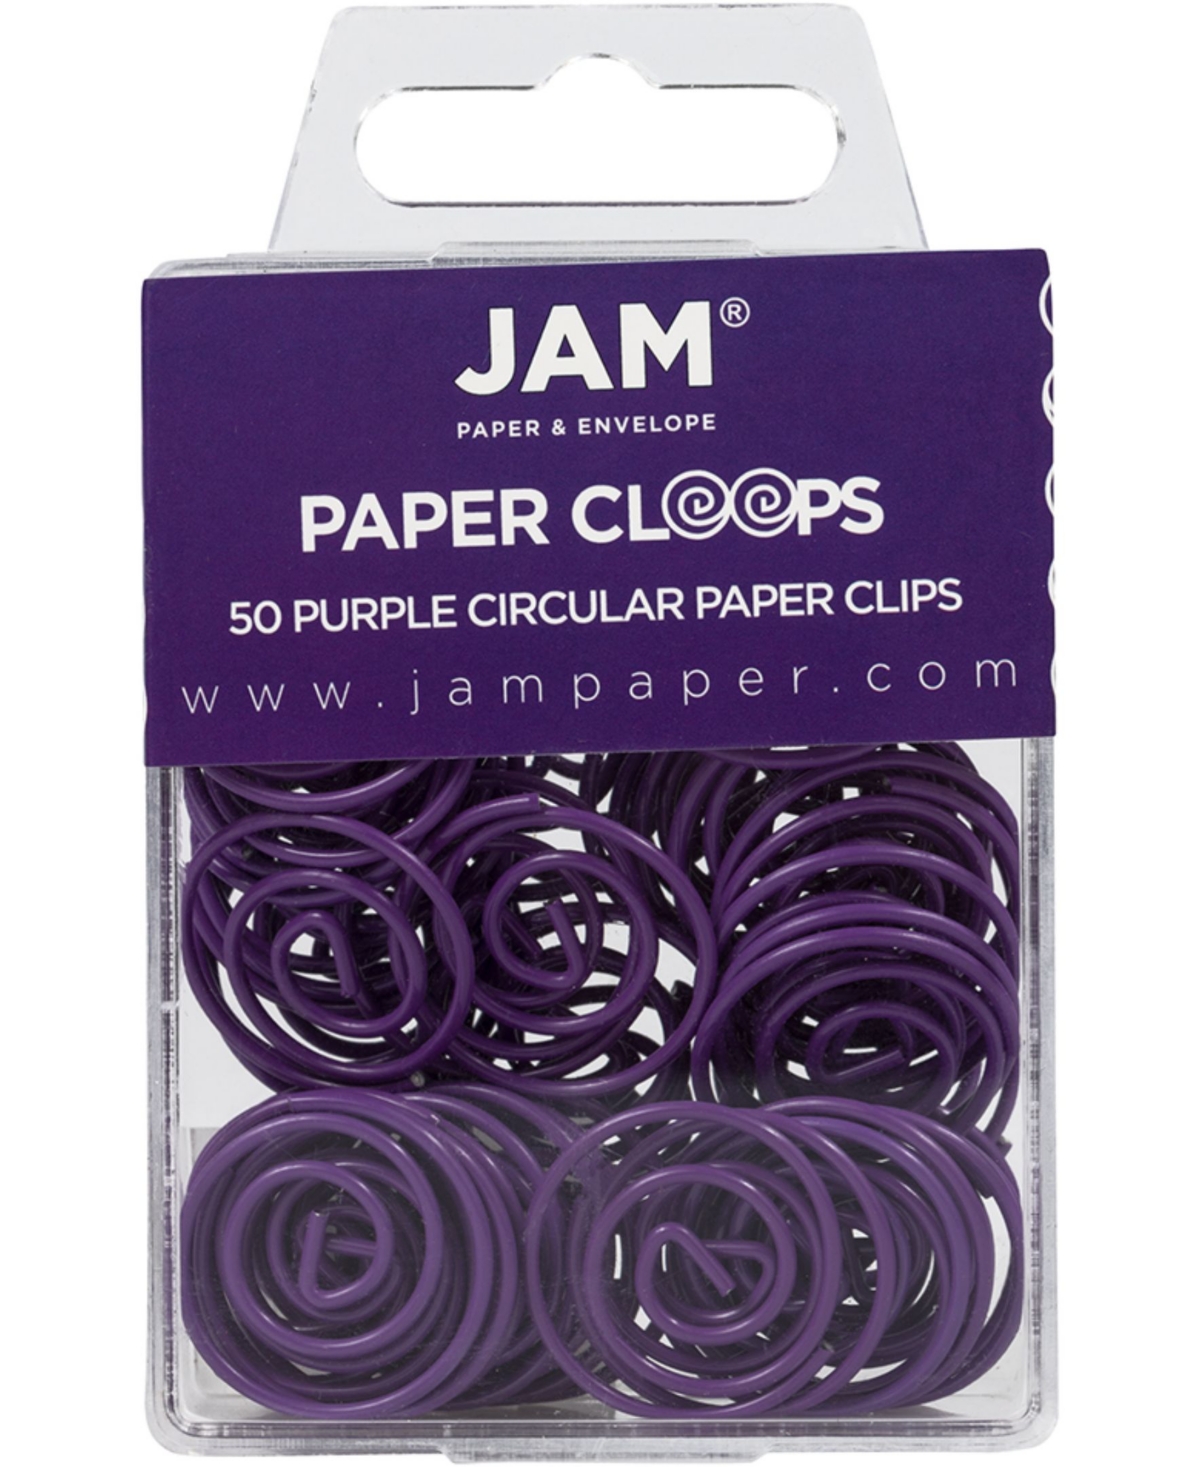 Jam Paper Circular Paper Clips In Purple